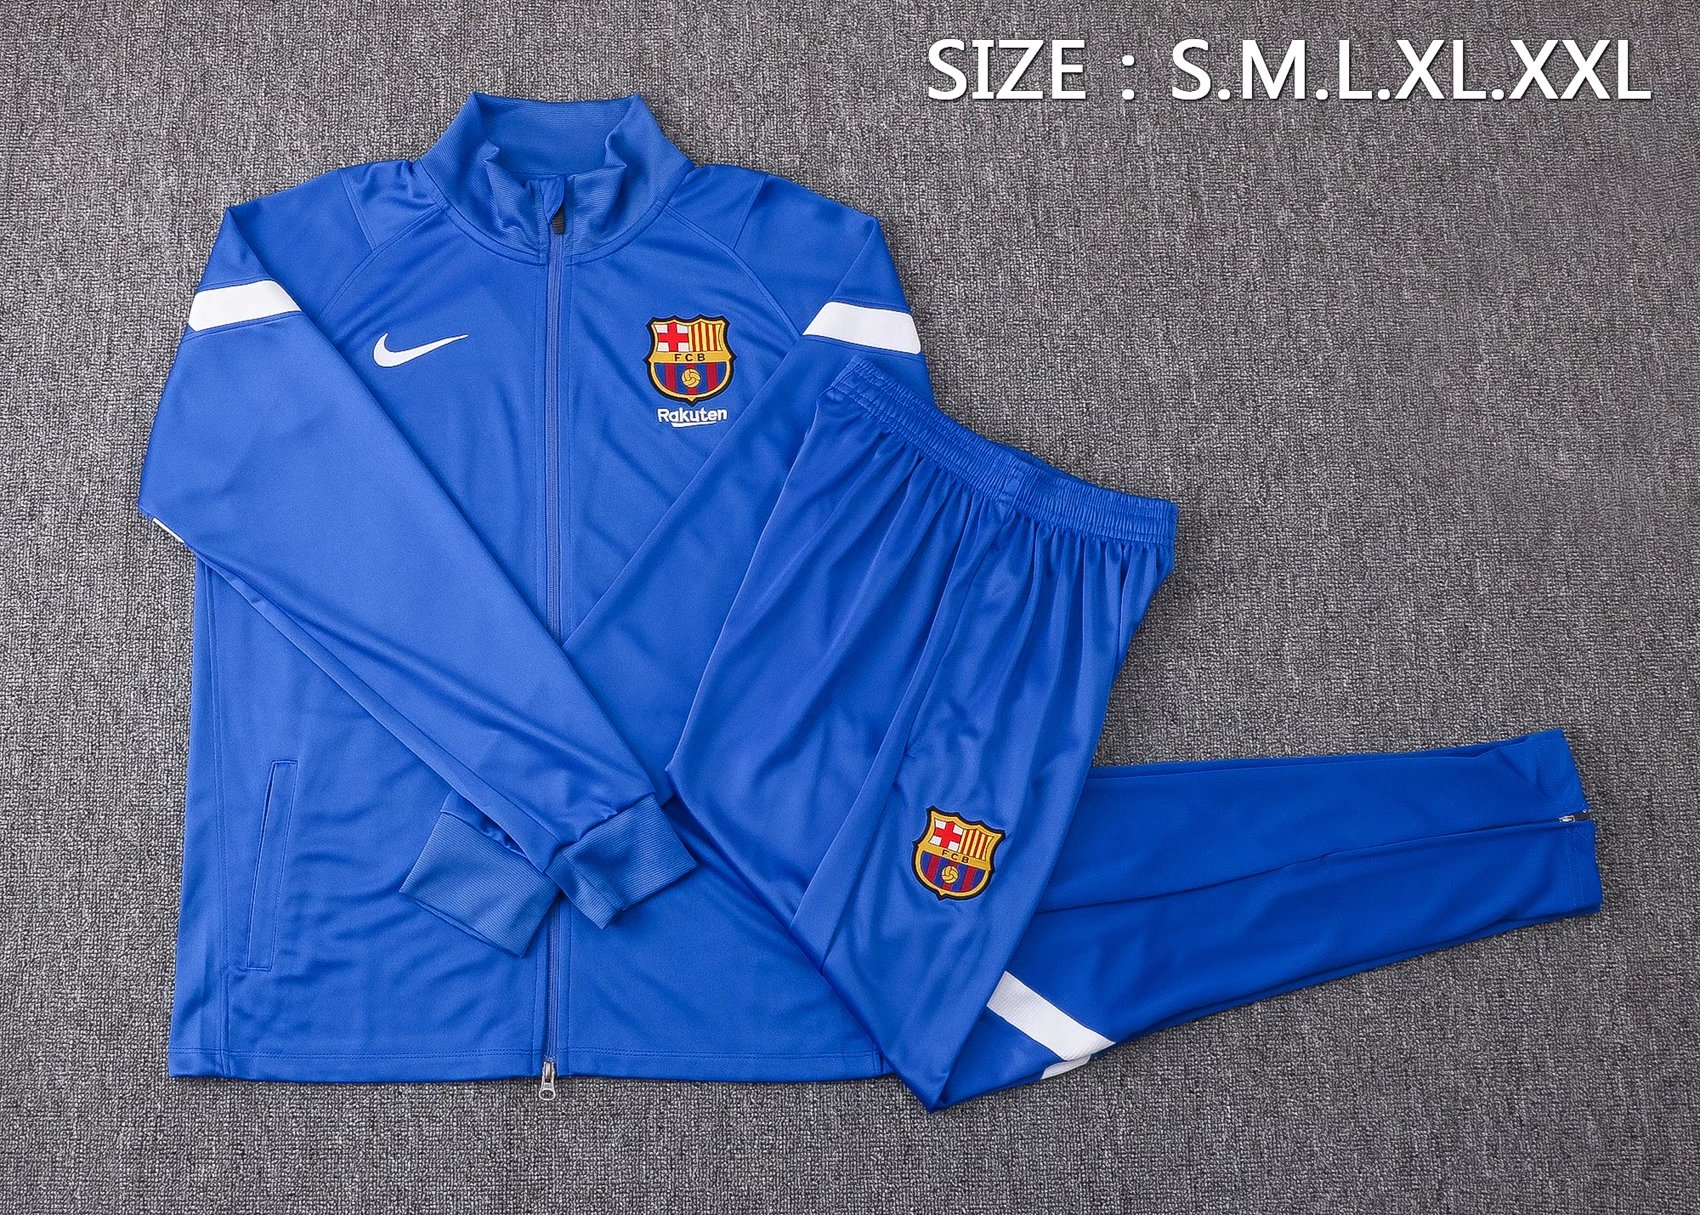 Barcelona Soccer Training Suit Jacket + Pants Replica Sharp Blue Mens 2021-22